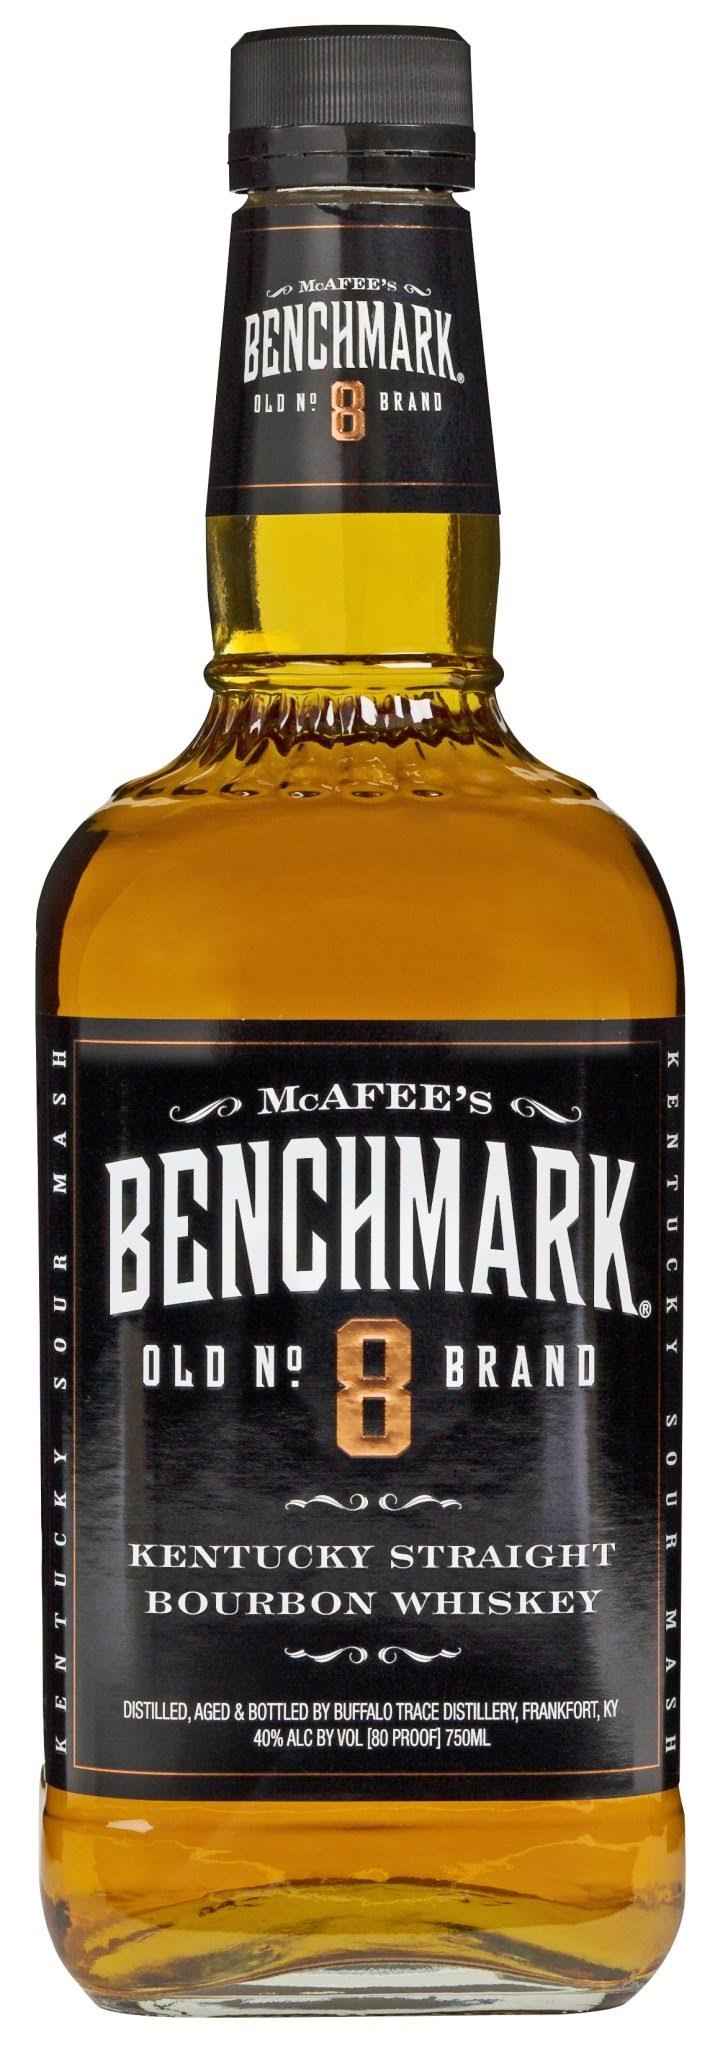 Benchmark Kentucky Stright Bourbon Whiskey